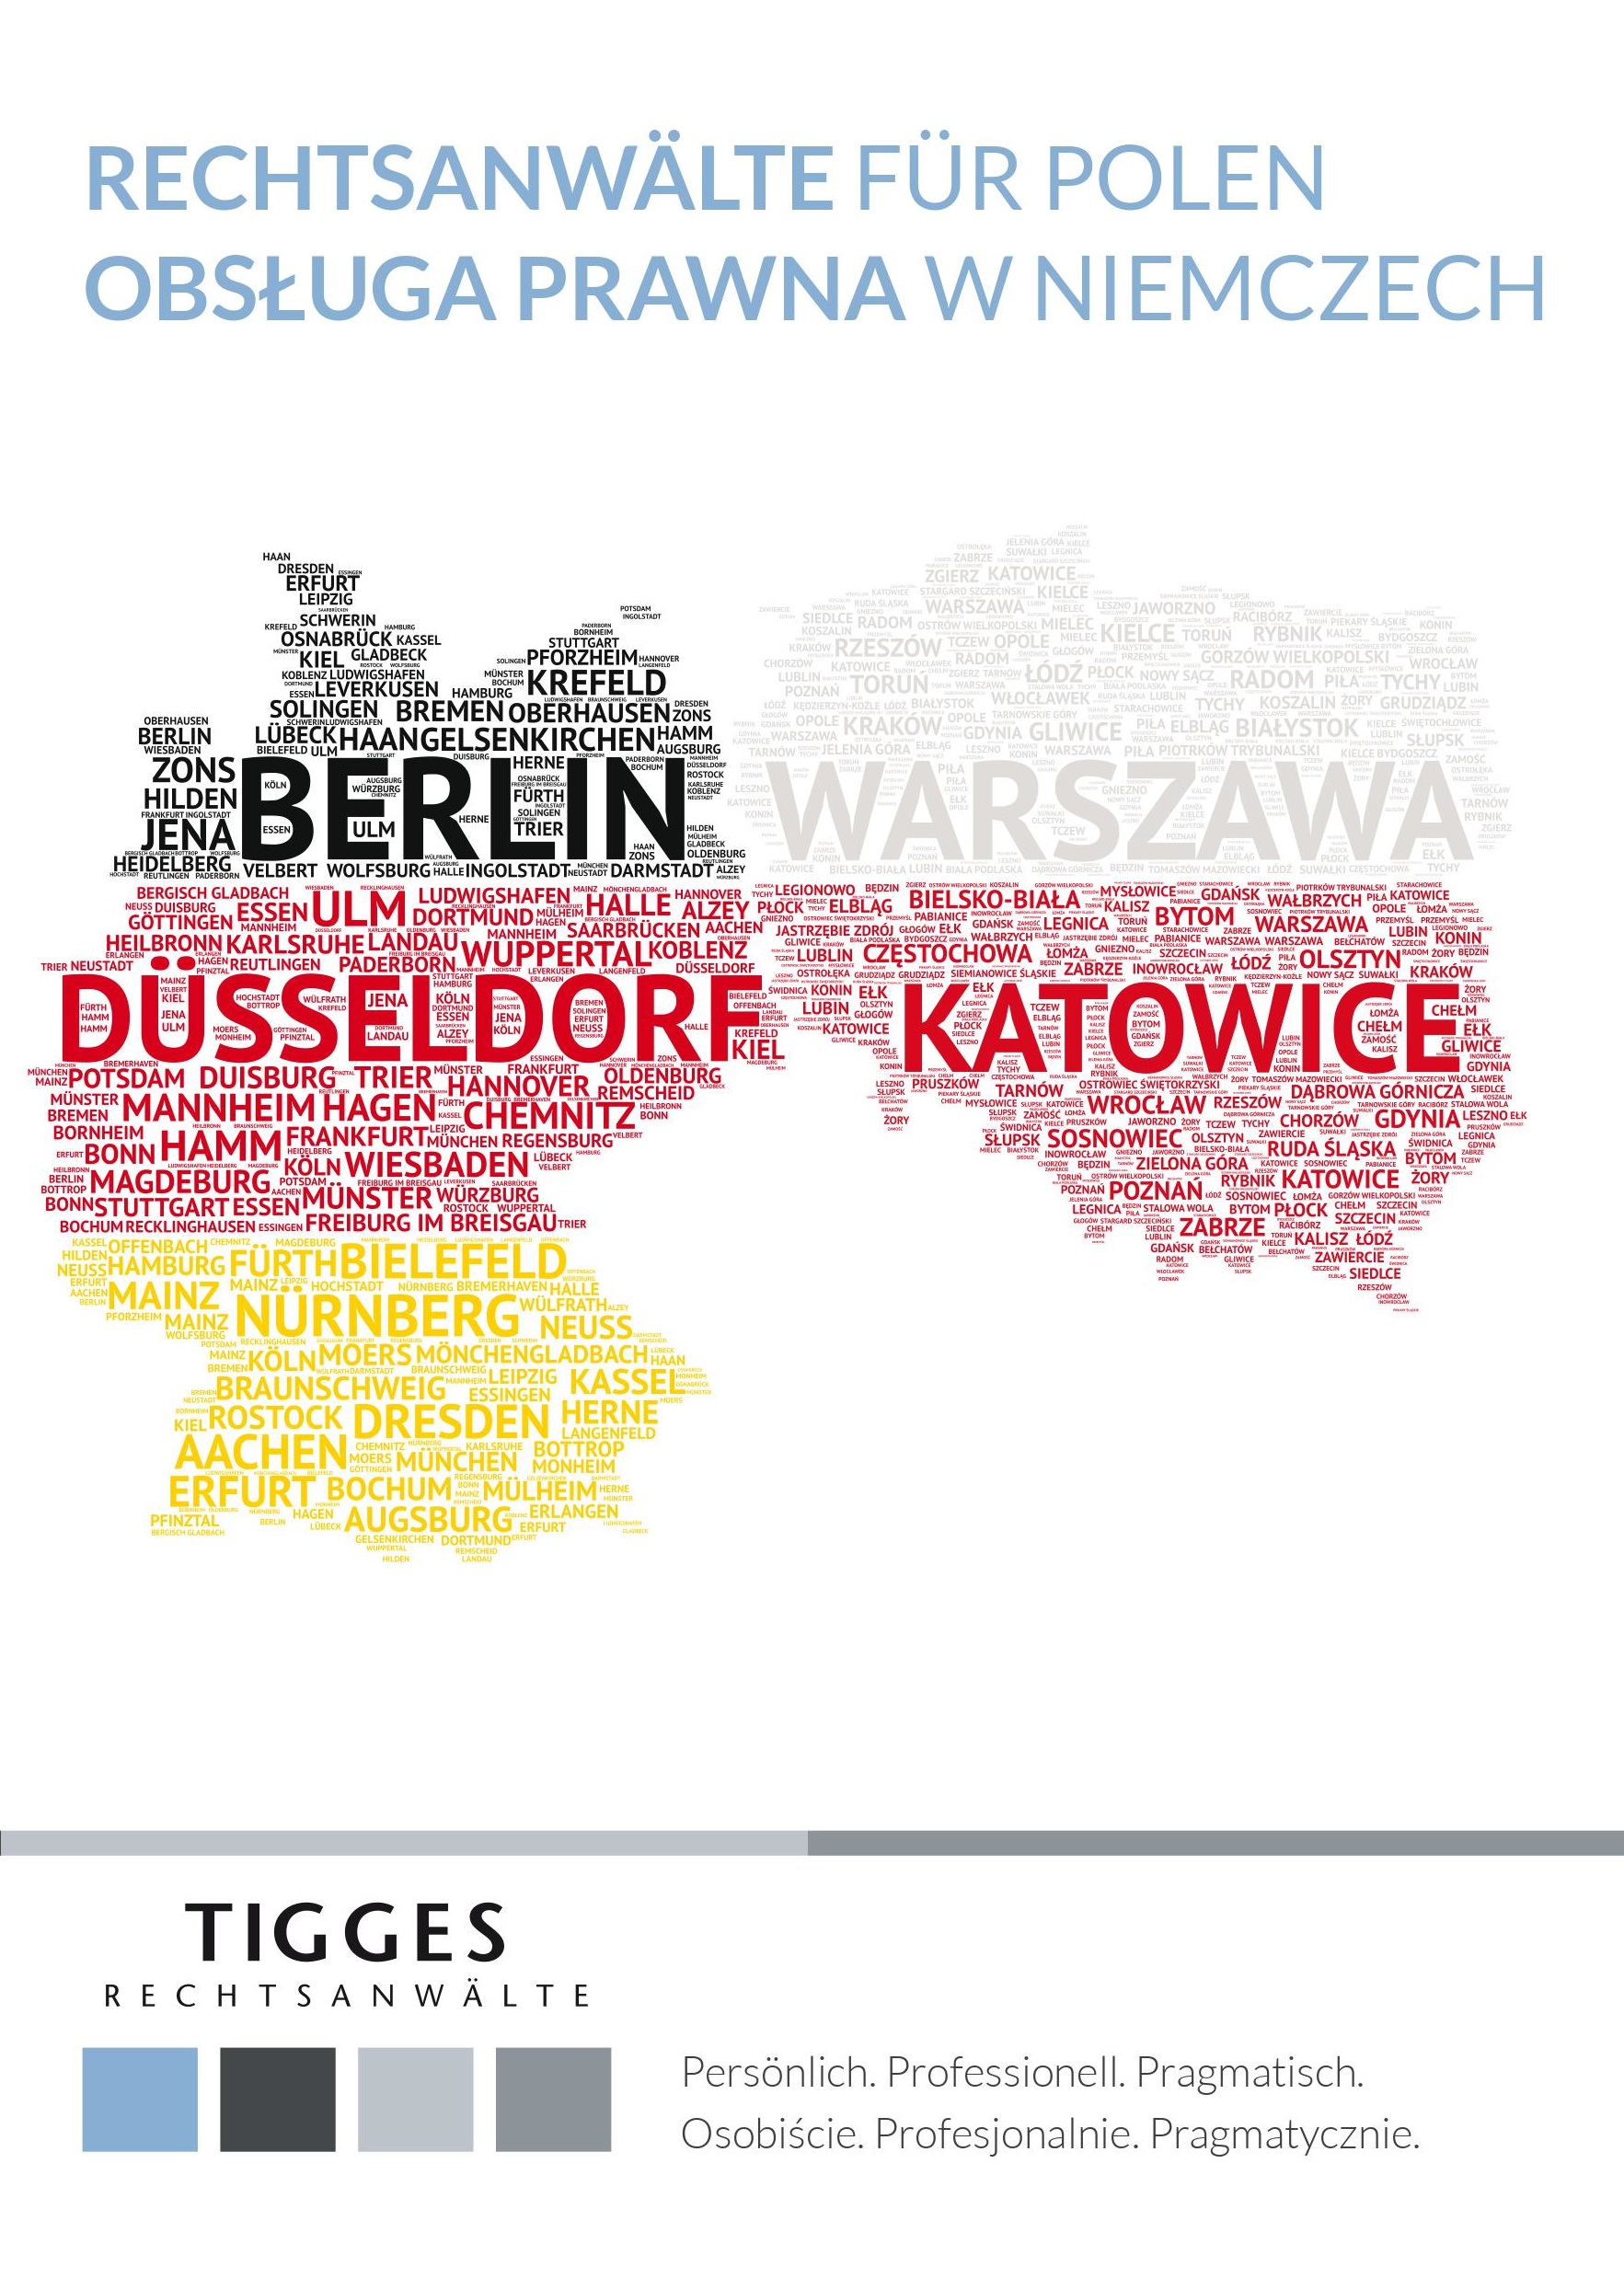 TIGGES Polish Desk Broschüre